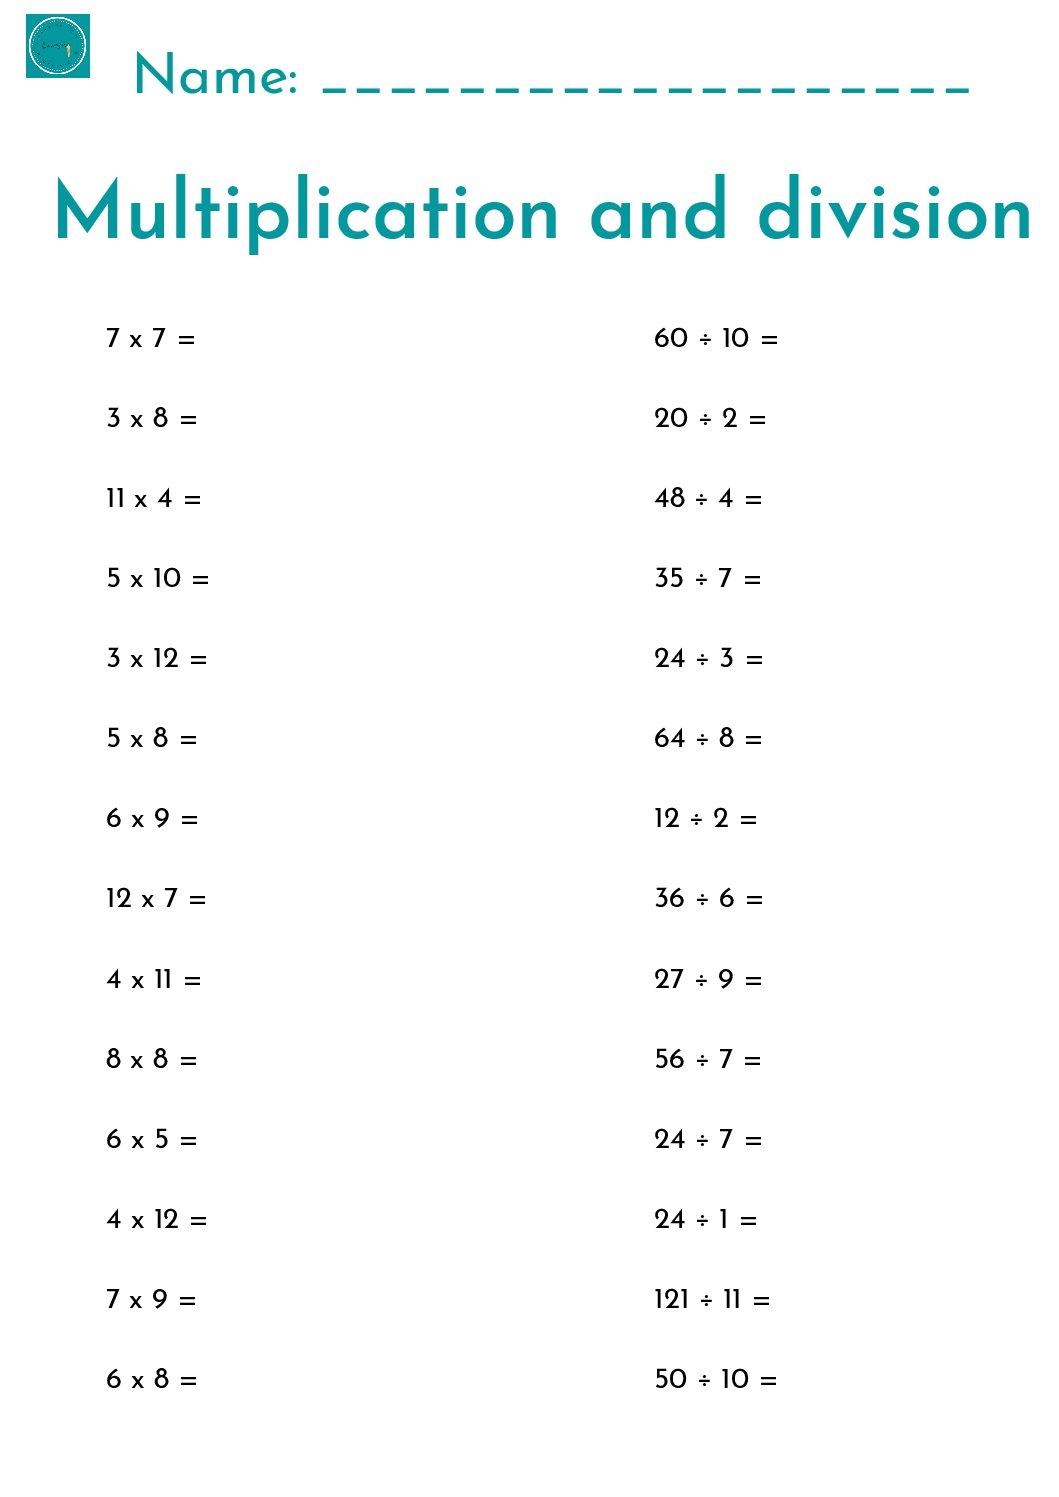 multiplication-and-division-practice-worksheets-printable-worksheets